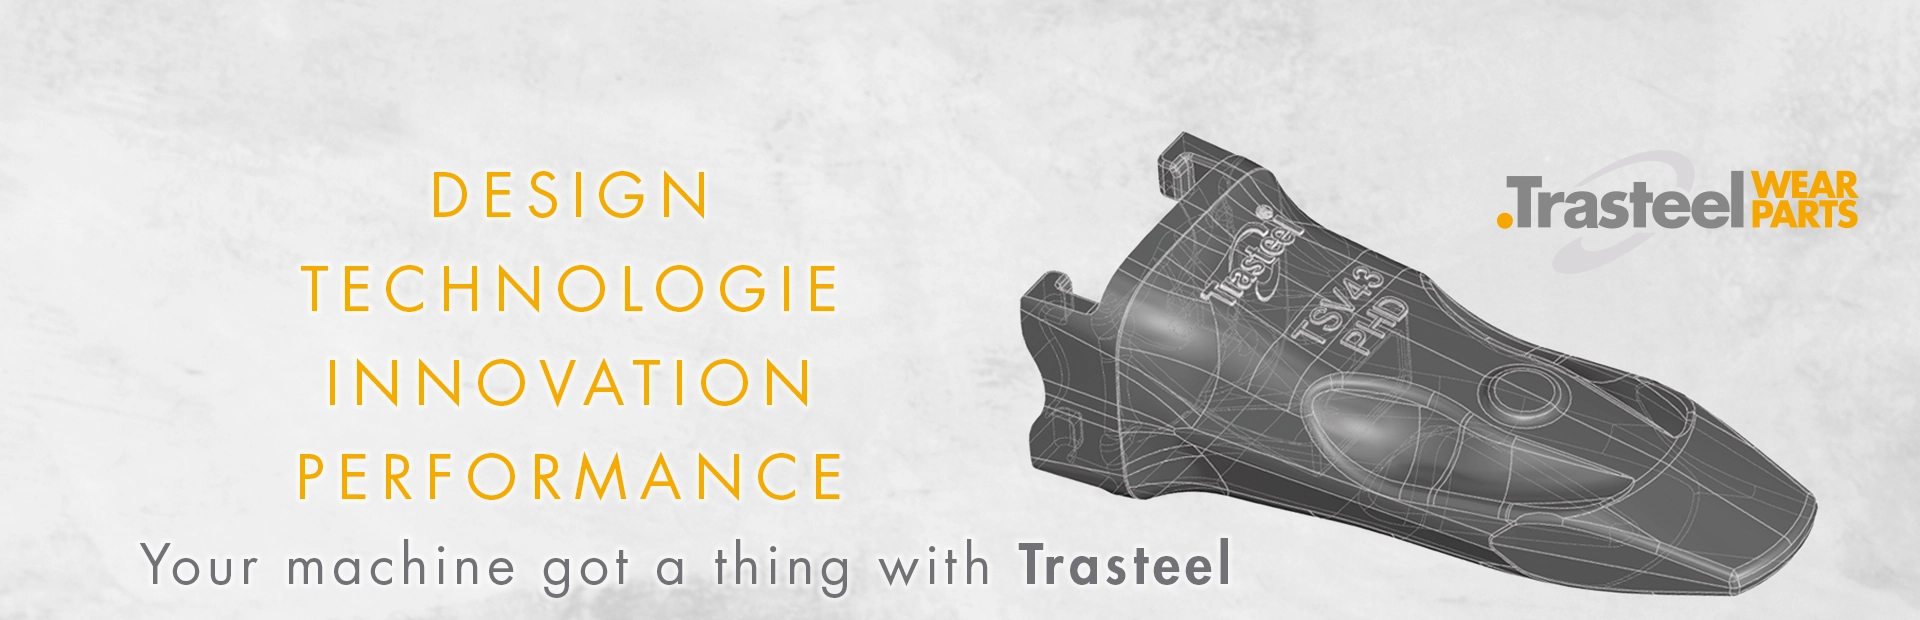 Design, technologie, innovation, performance - Trasteel Wear Parts